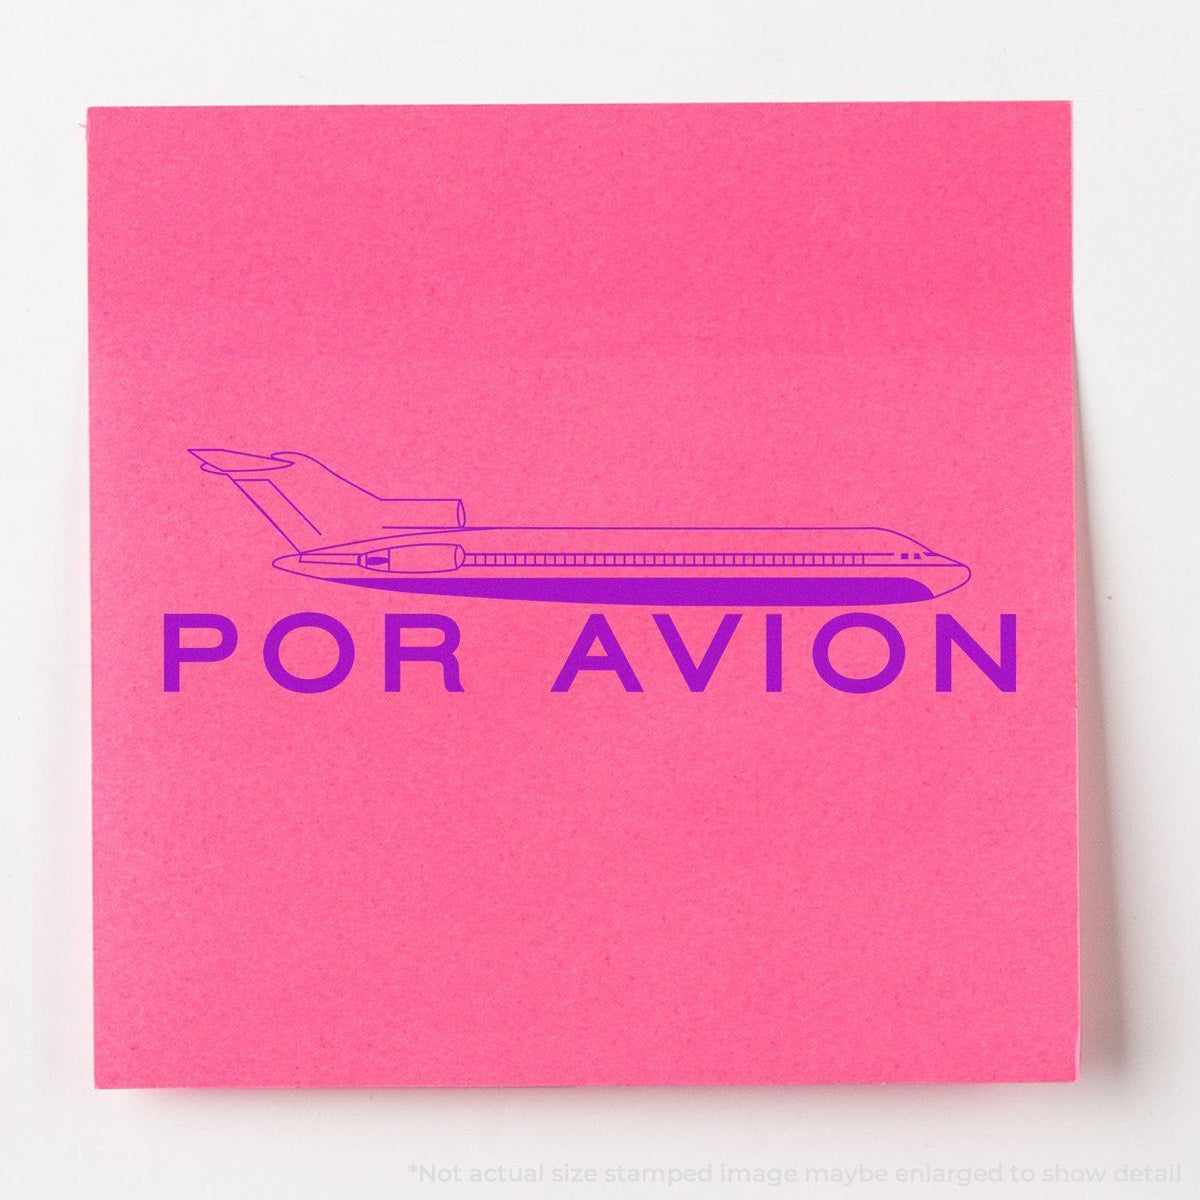 In Use Large Por Avion Rubber Stamp Image